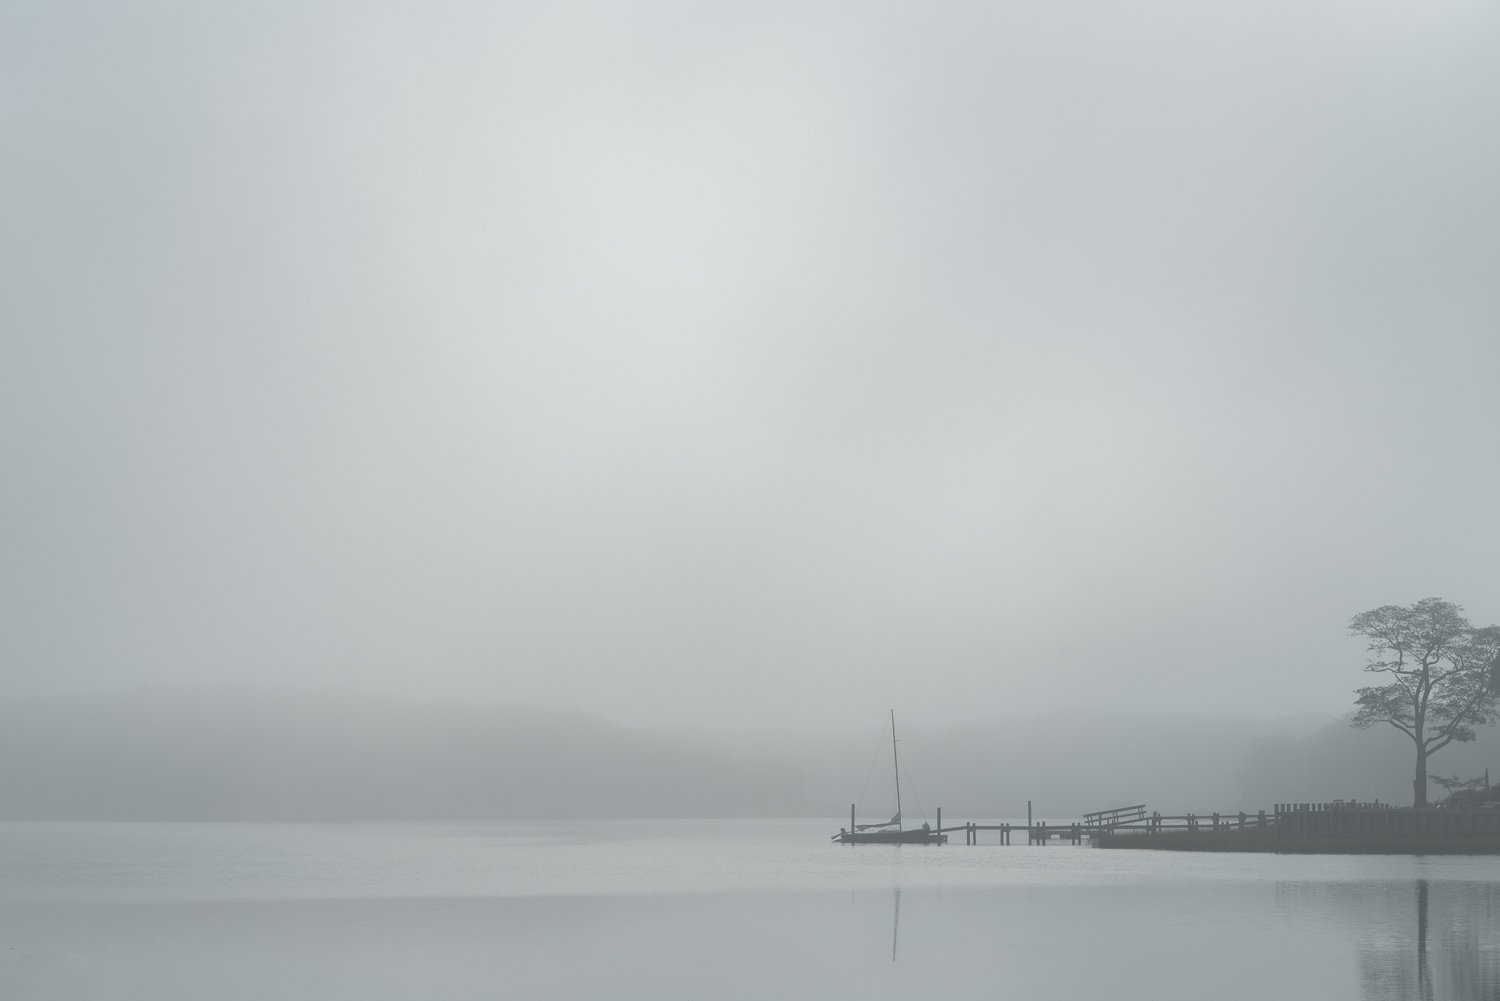  Sailboat docked in heavy fog 